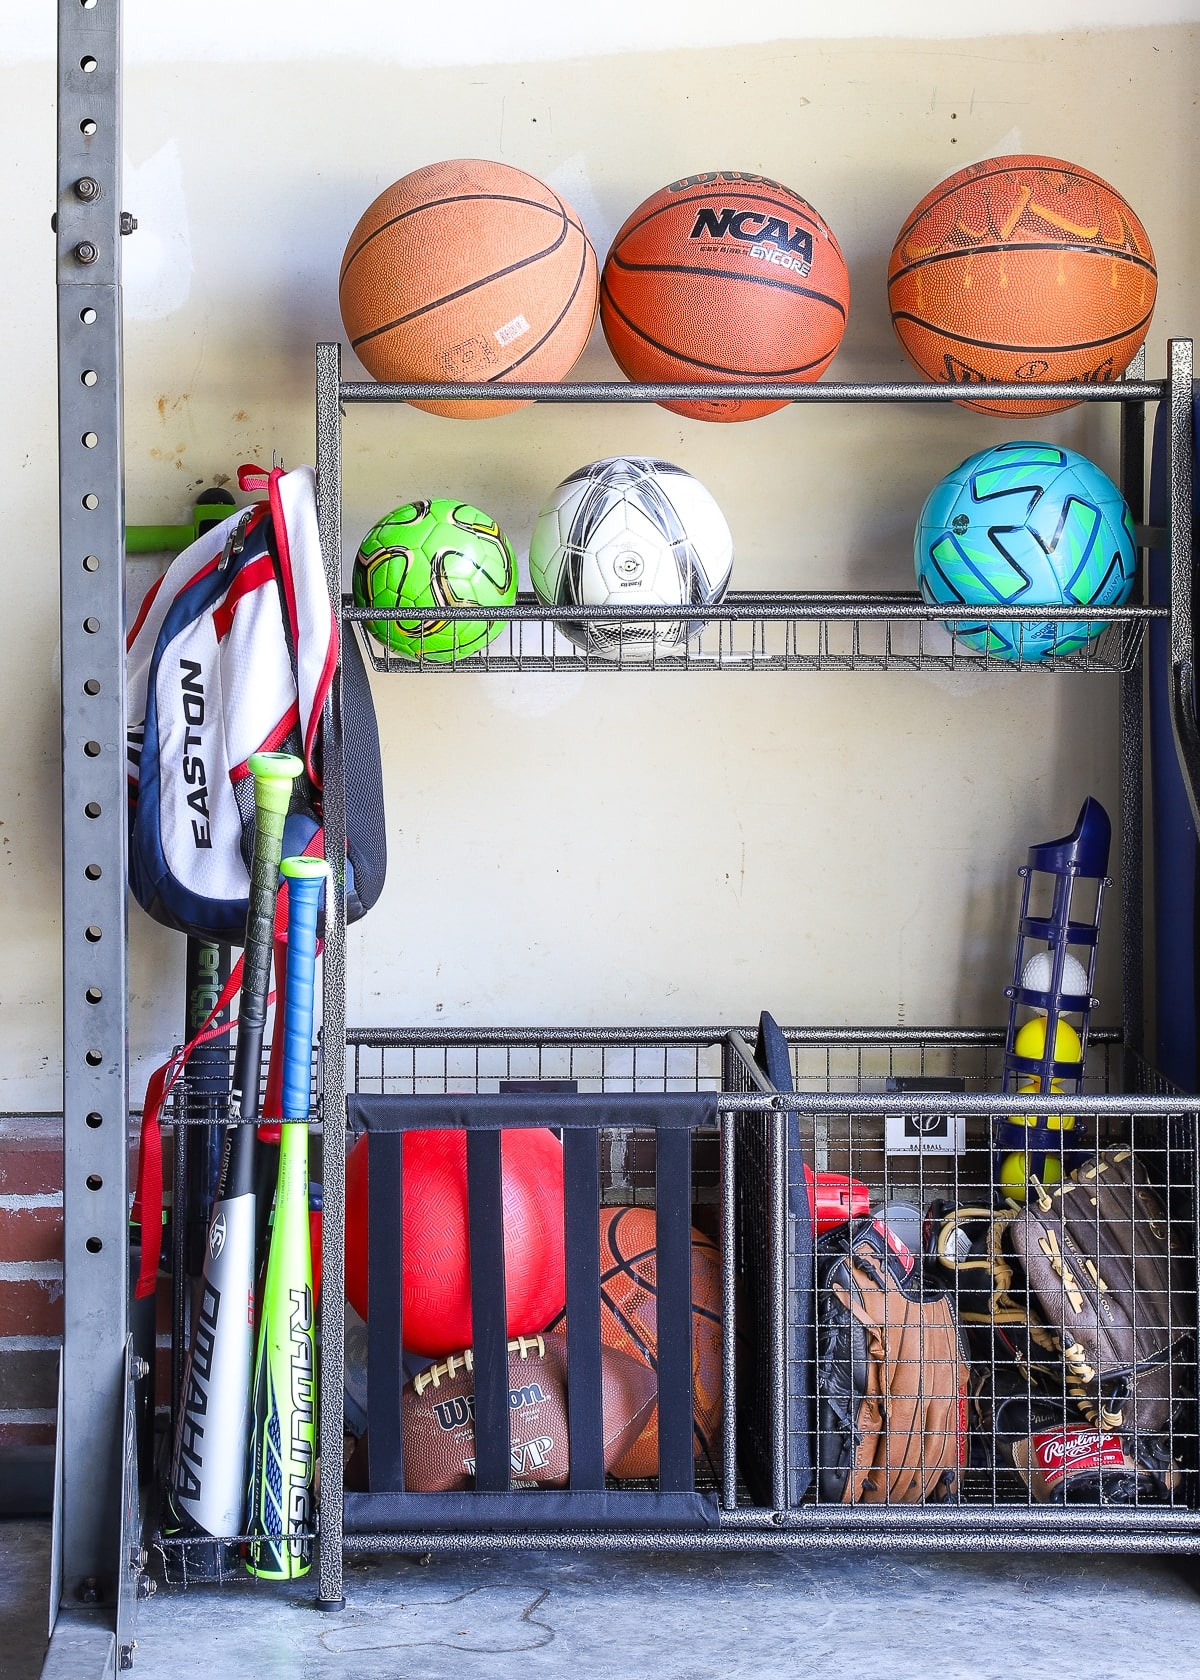 DIY Garage Storage ideas and Organization Tips Part II - Rambling